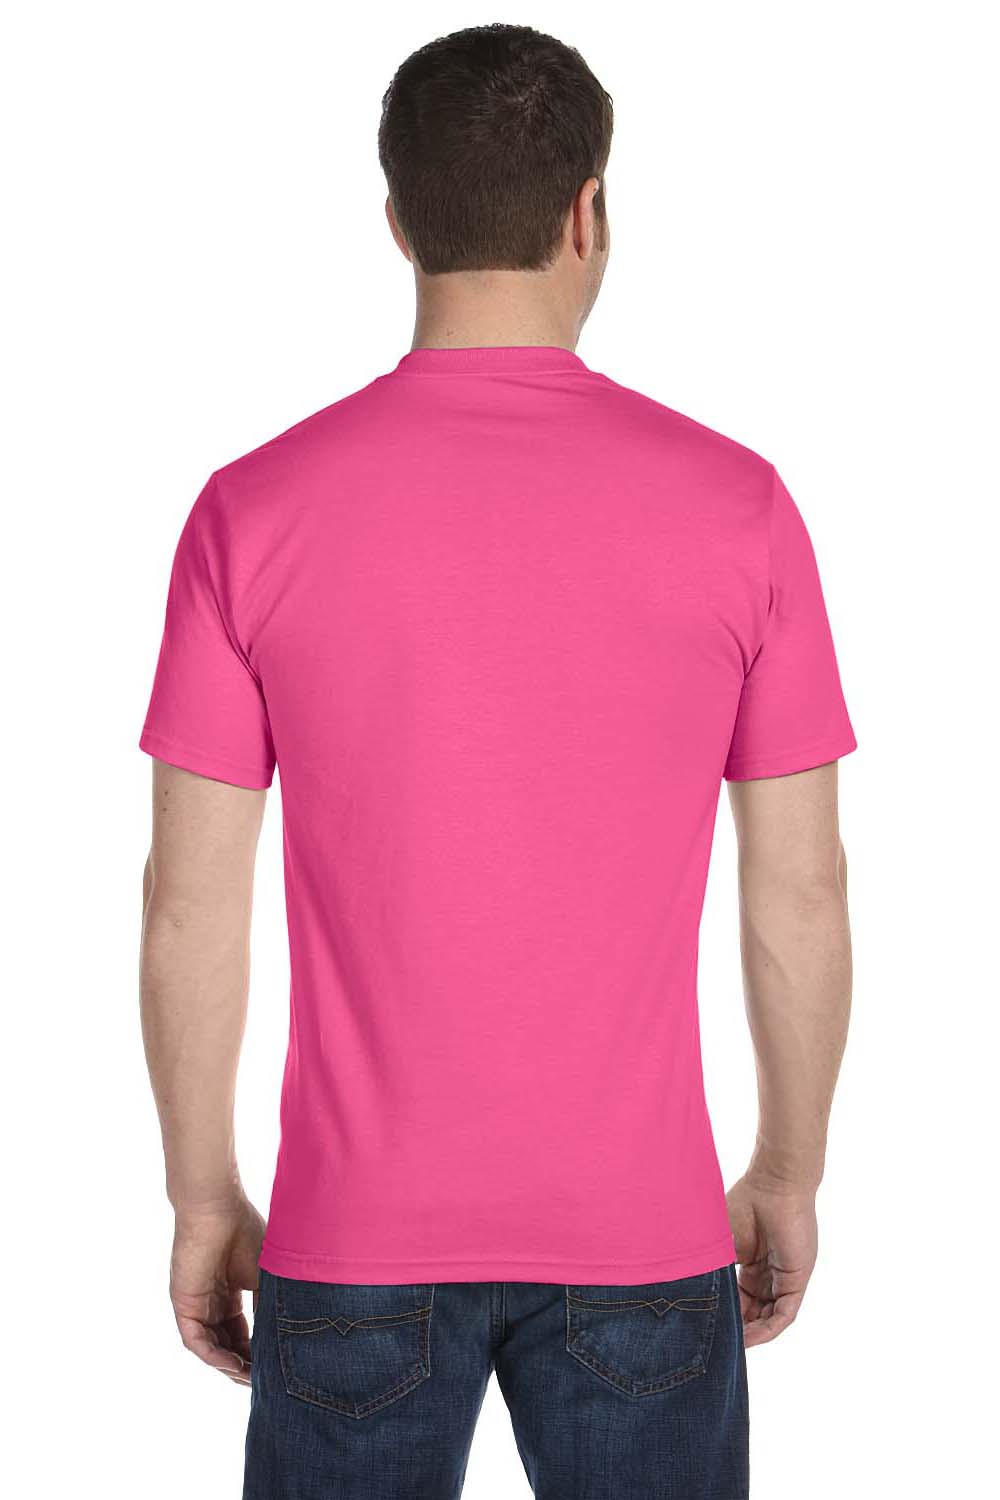 Hanes 5180 Mens Beefy-T Short Sleeve Crewneck T-Shirt Wow Pink Back